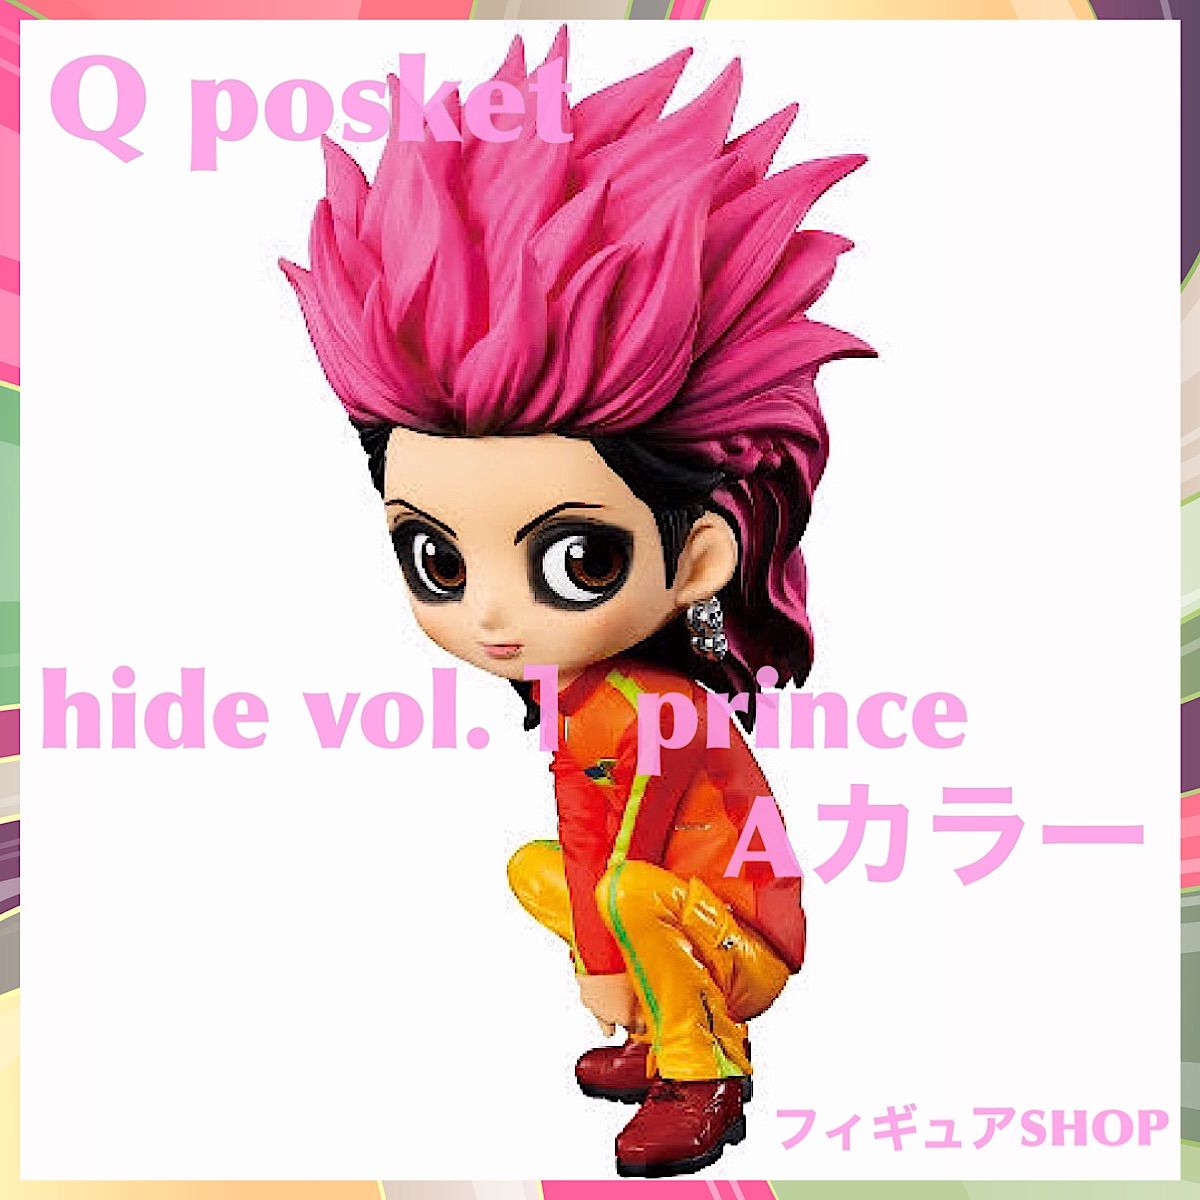 Q posket hide vol.１ prince ヒデ ノーマルカラー - メルカリ